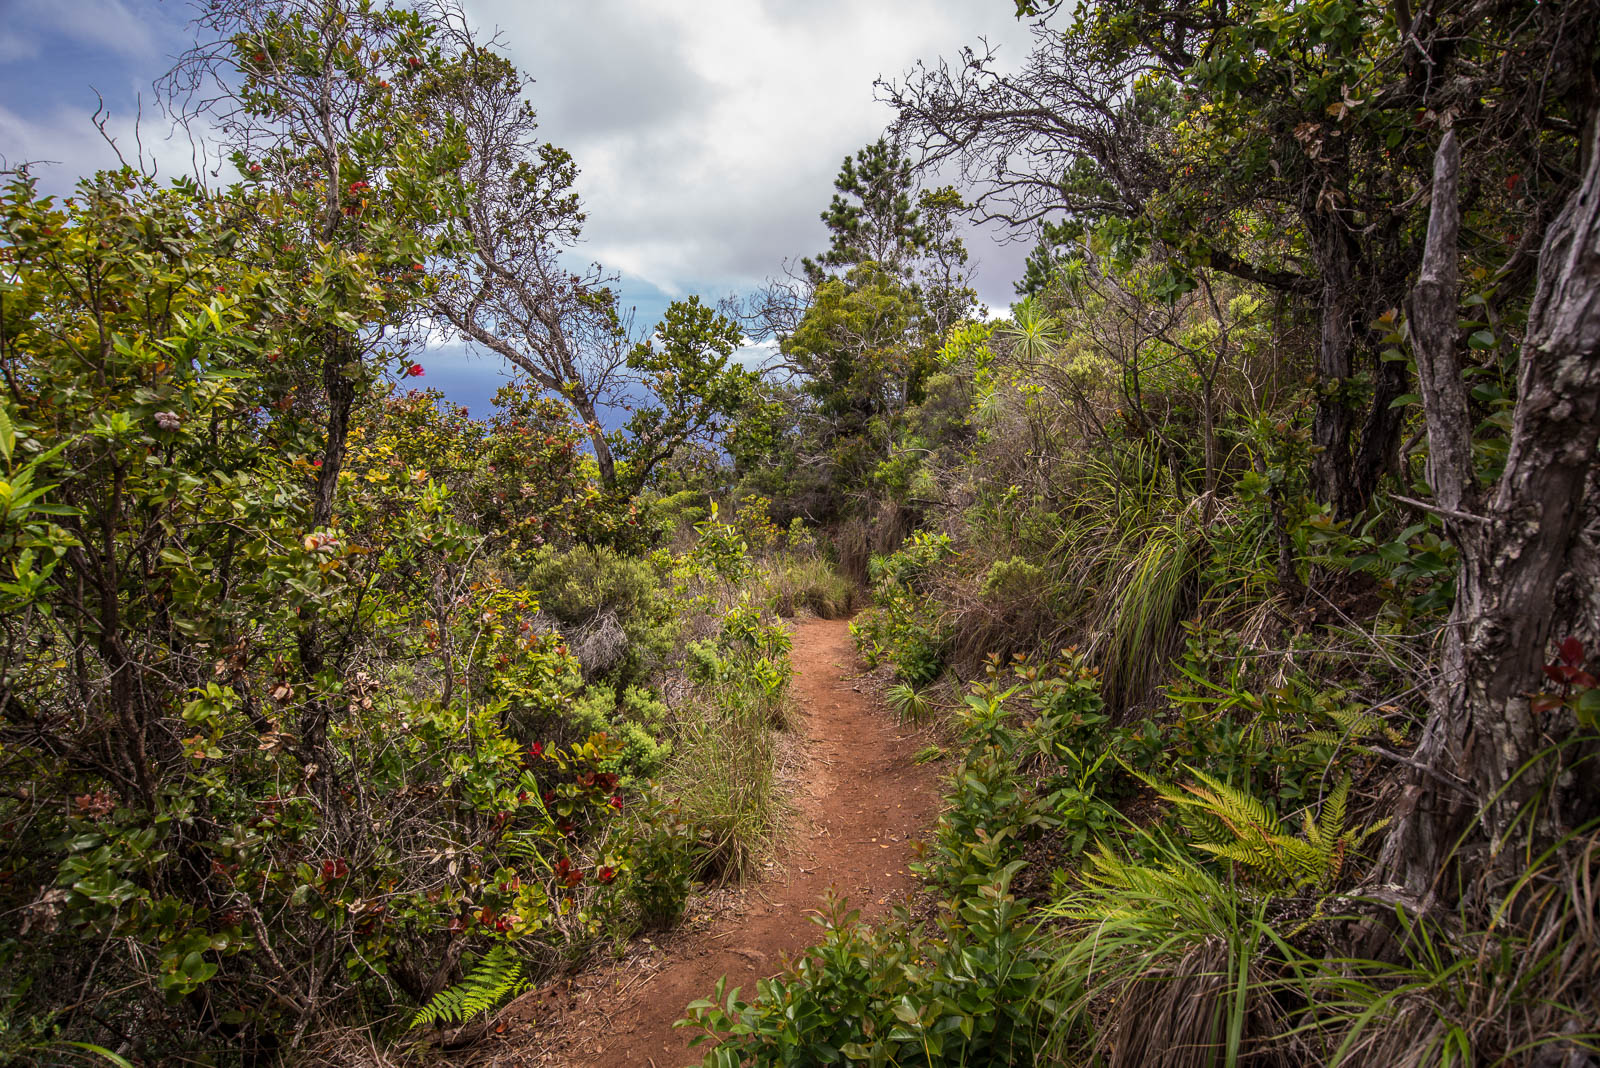 Nualolo shurbs and trees trail